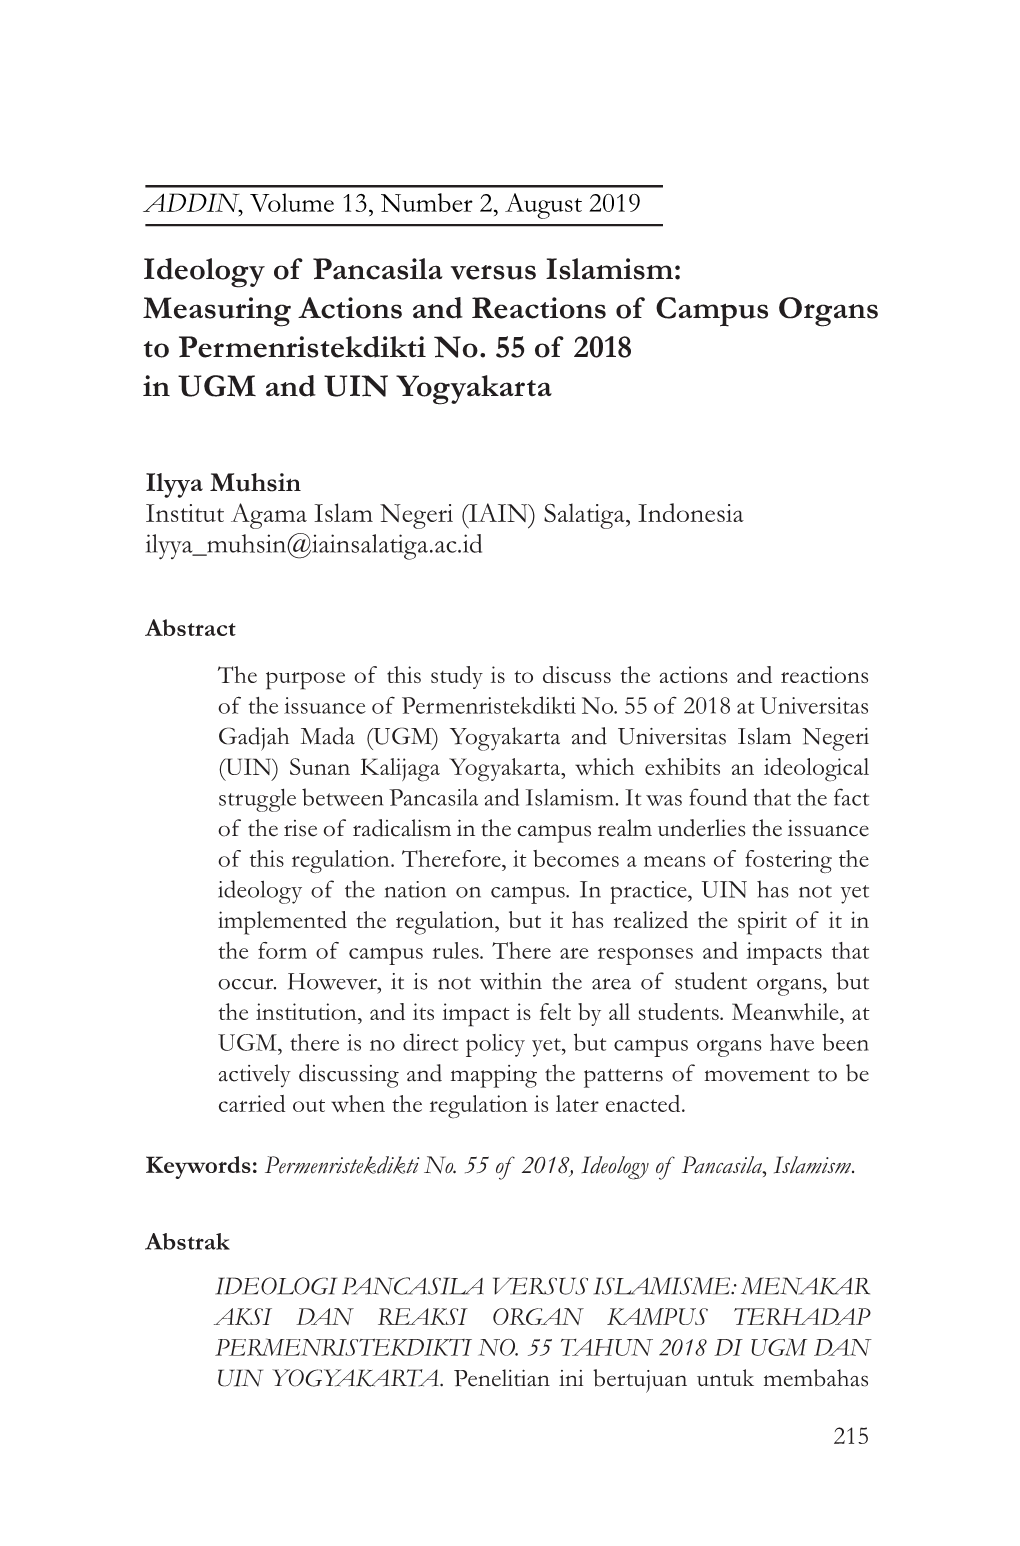 Ideology of Pancasila Versus Islamism: Measuring Actions and Reactions of Campus Organs to Permenristekdikti No